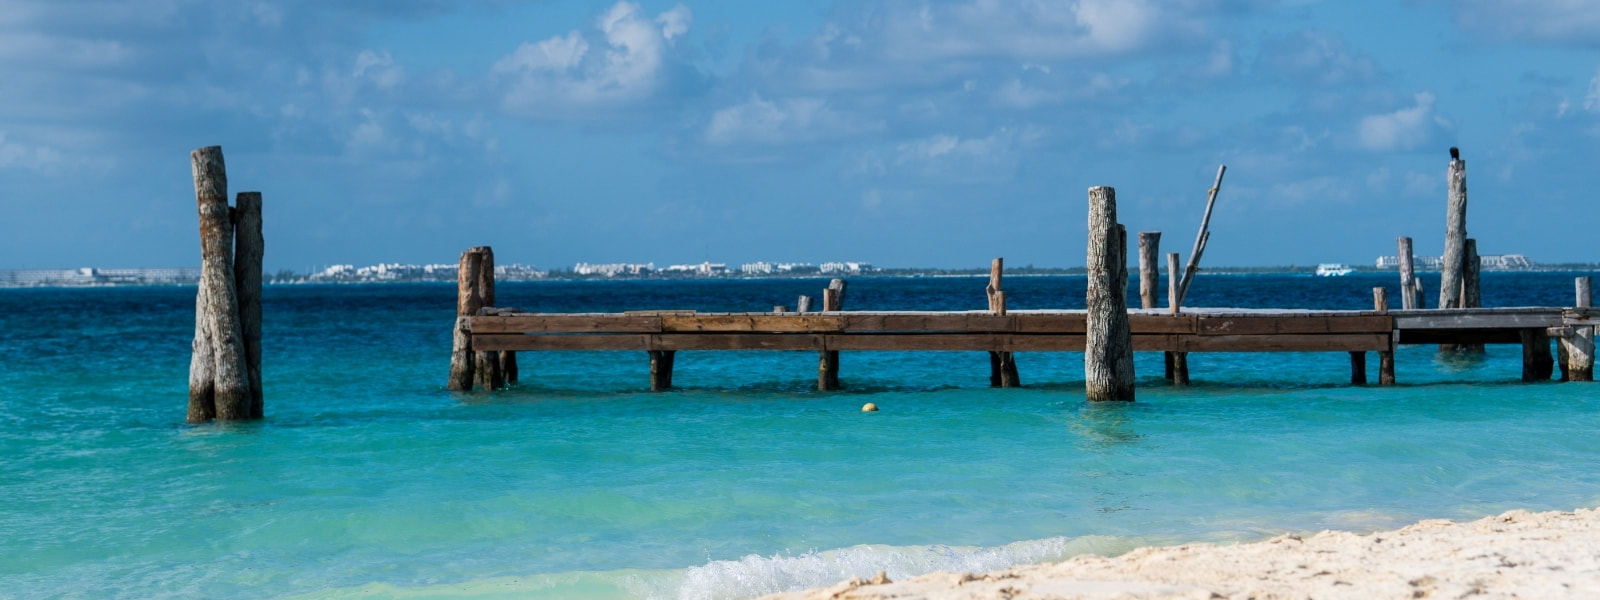 Isla Mujeres: The best Sargasso-free beaches